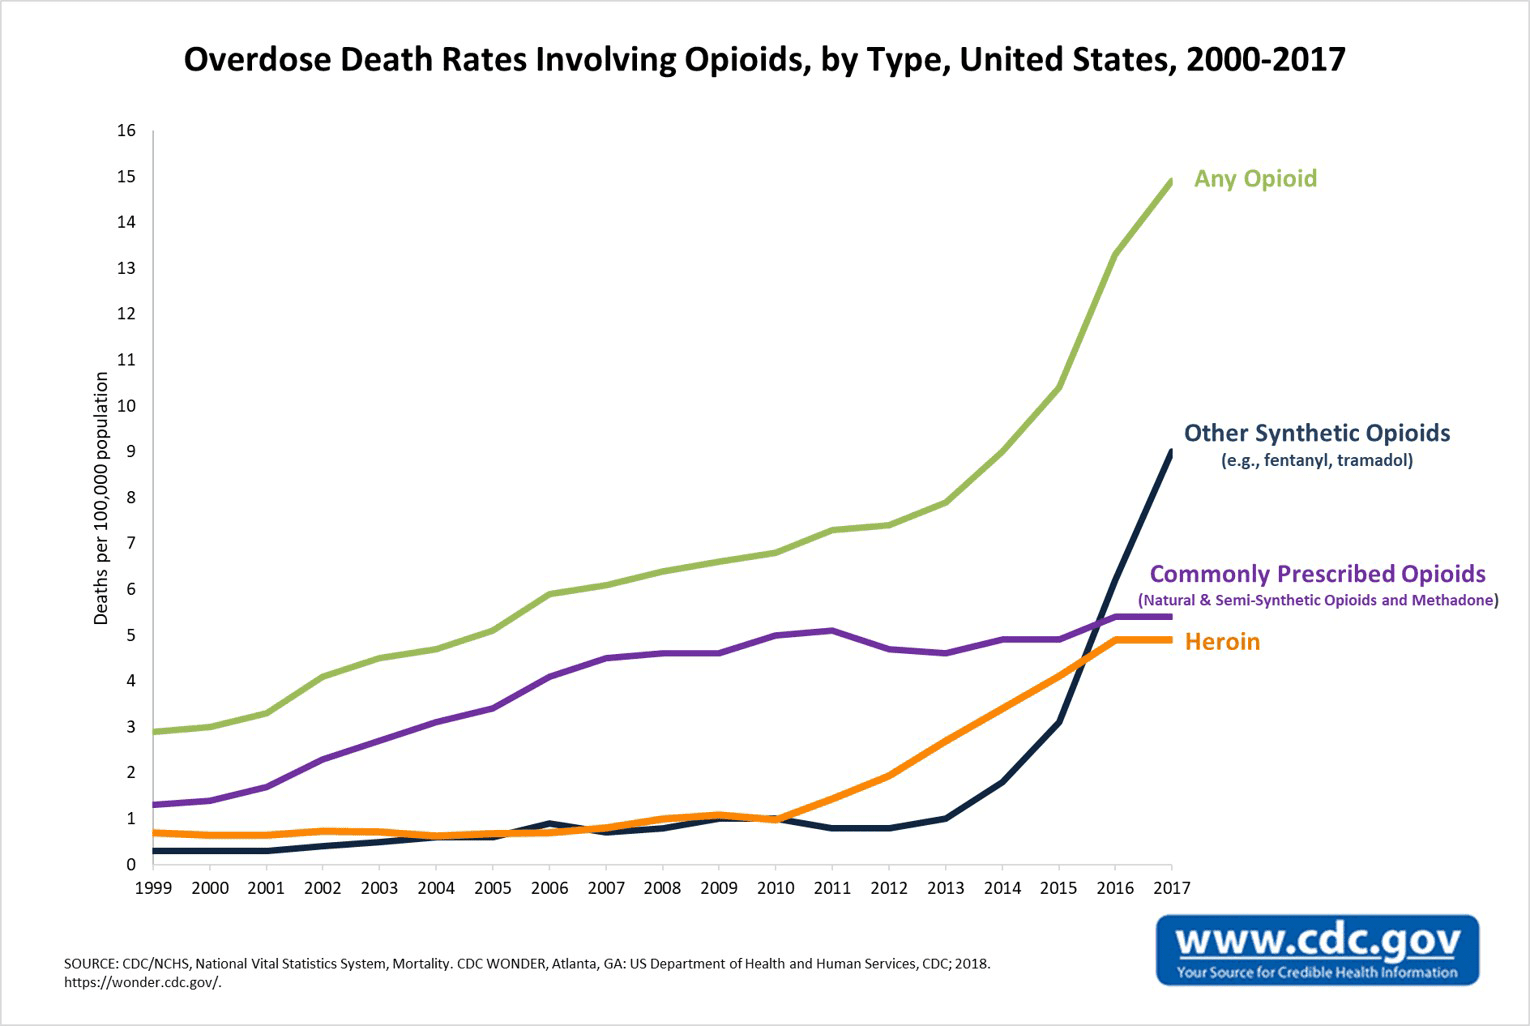 the opioid crisis